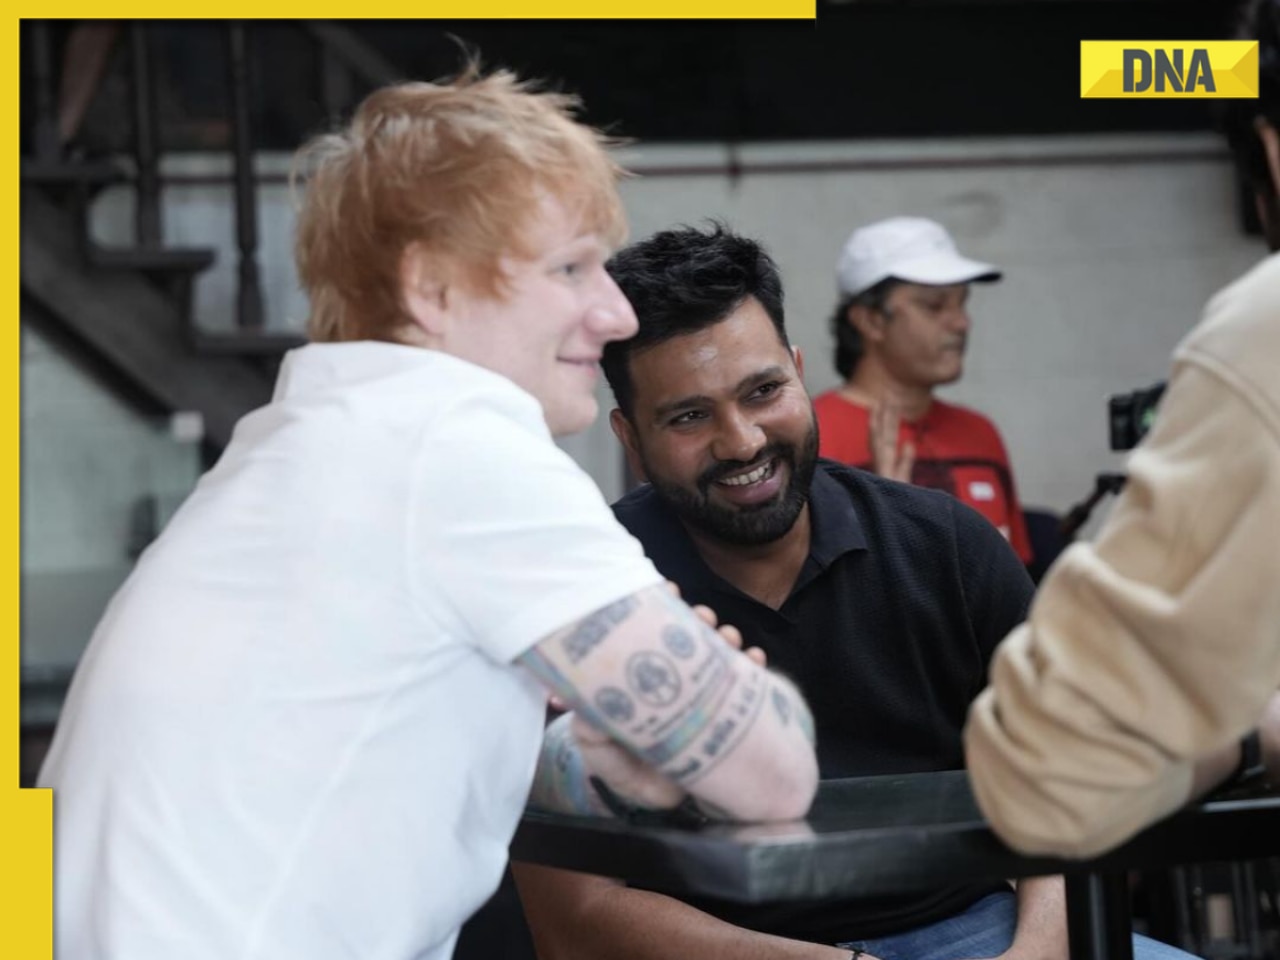 Ed Sheeran sings 'Bad Habits' for Rohit Sharma's daughter Samaira in heartwarming viral video